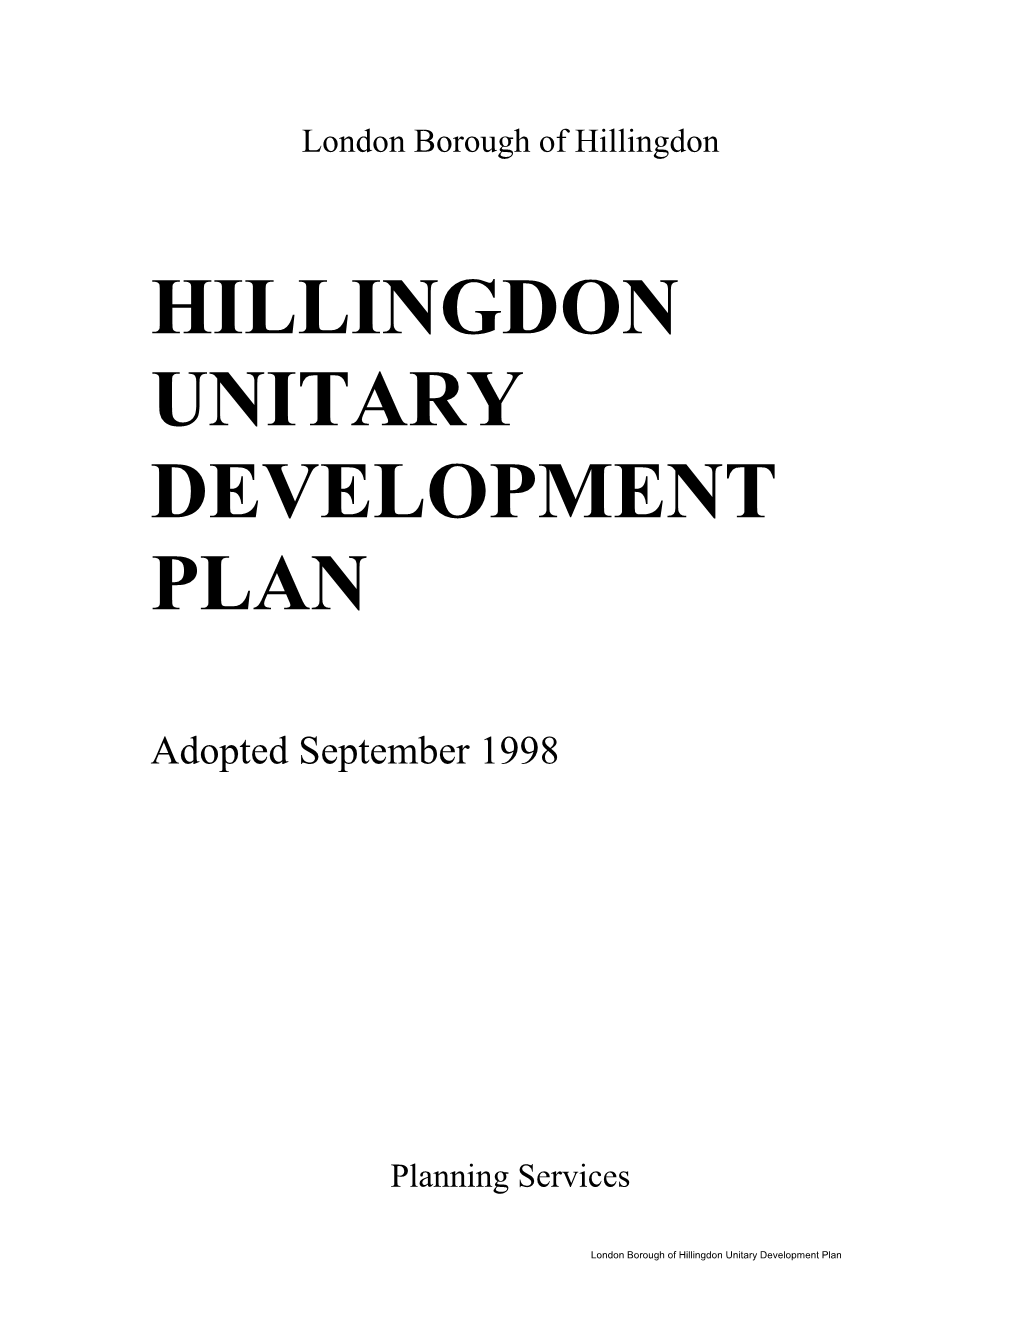 Hillingdon Unitary Development Plan